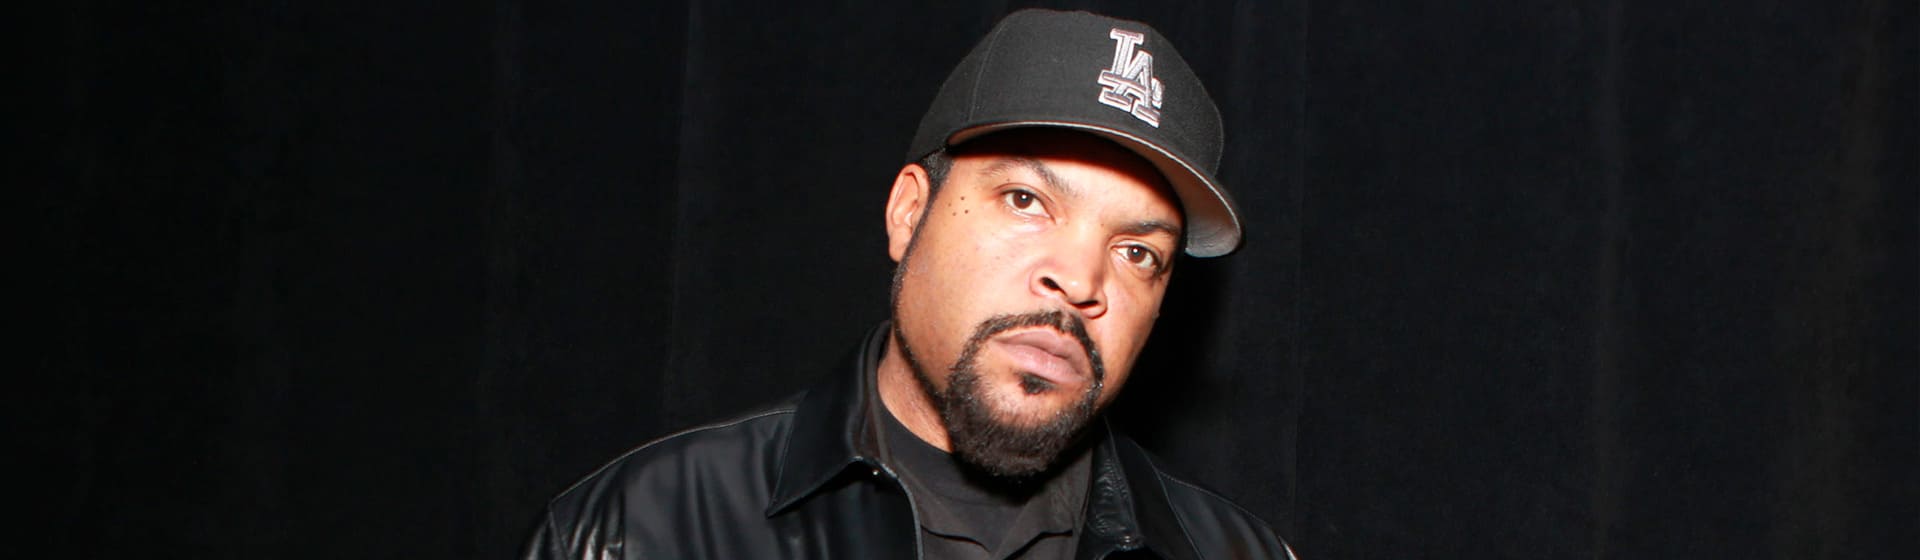 Ice Cube - Мерч и одежда с атрибутикой